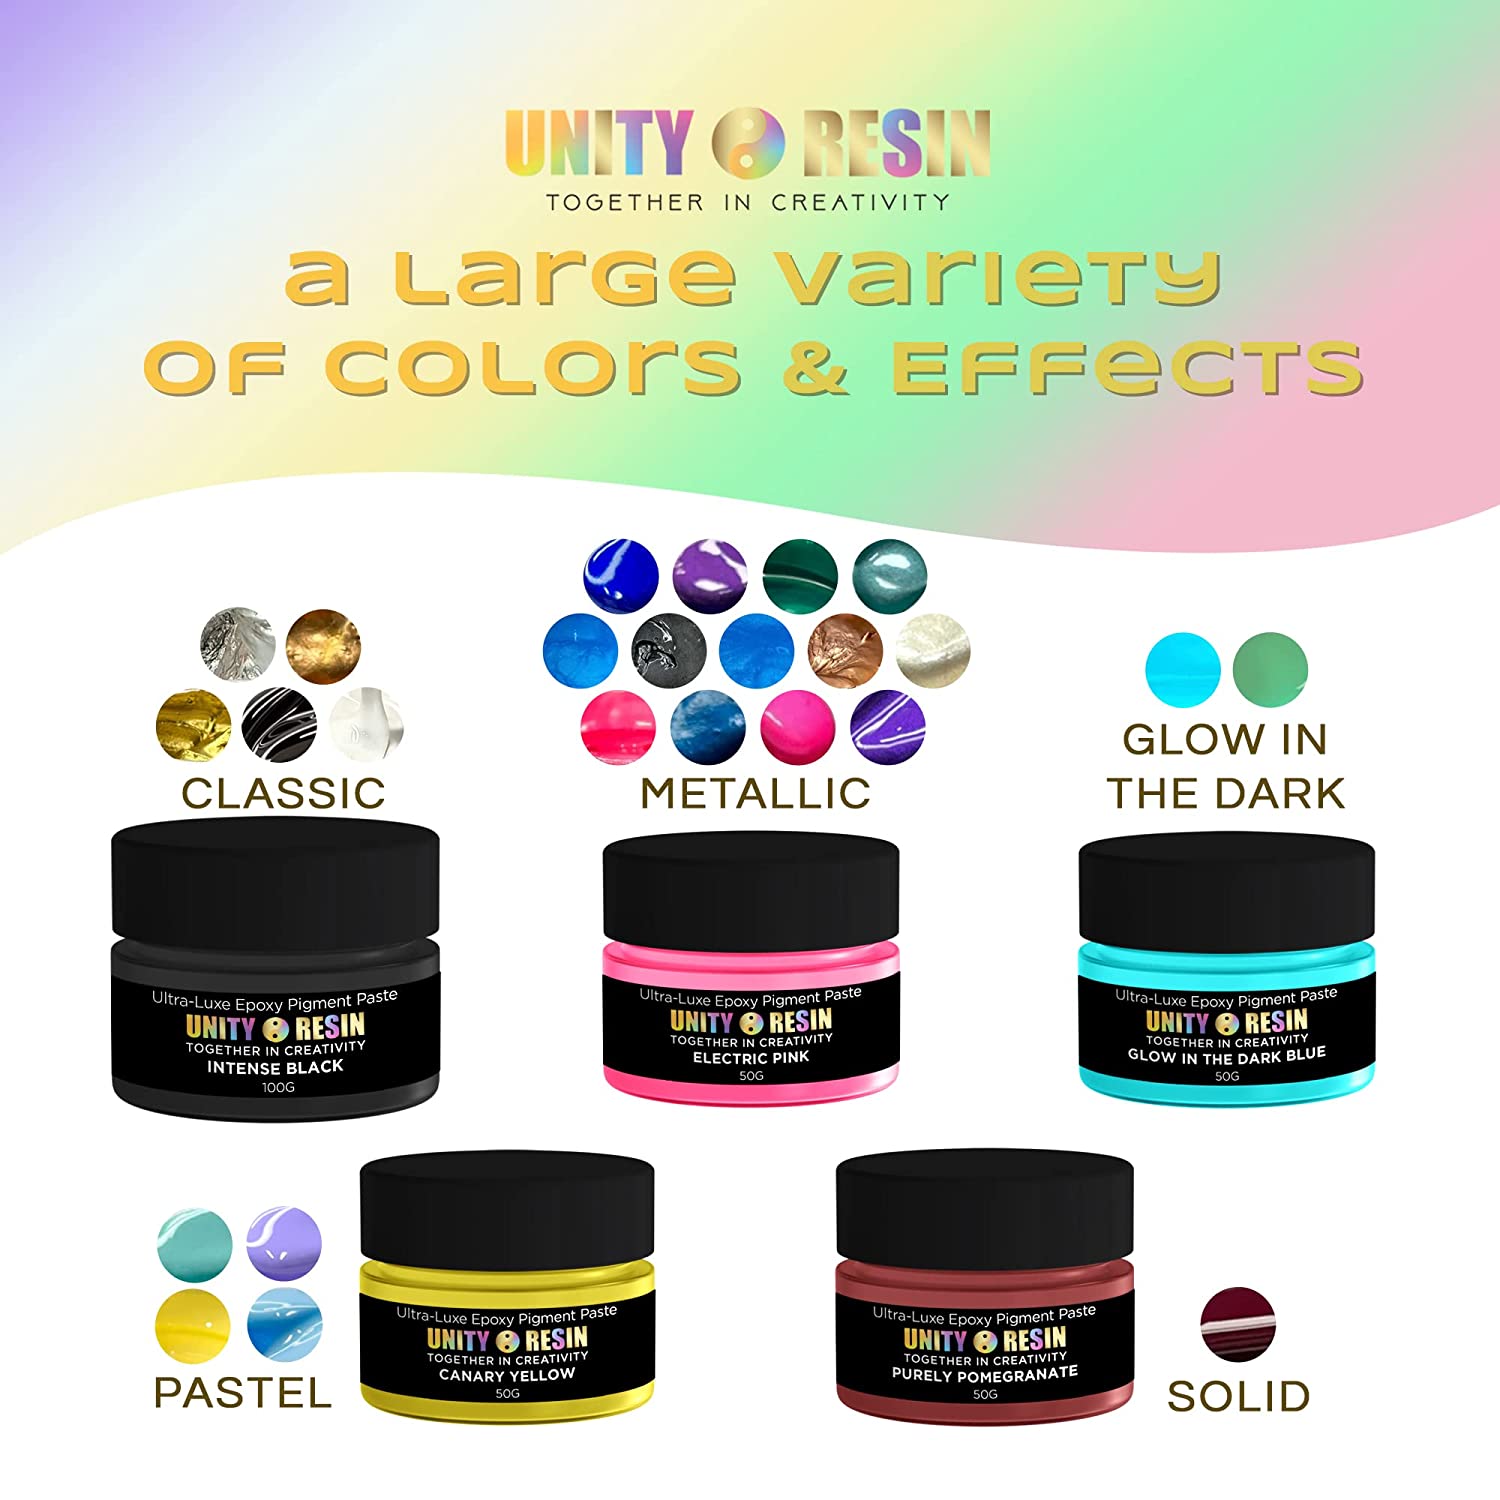 Ultra-Luxe Epoxy Resin Pigment Paste-VIVID VIOLET (50G)